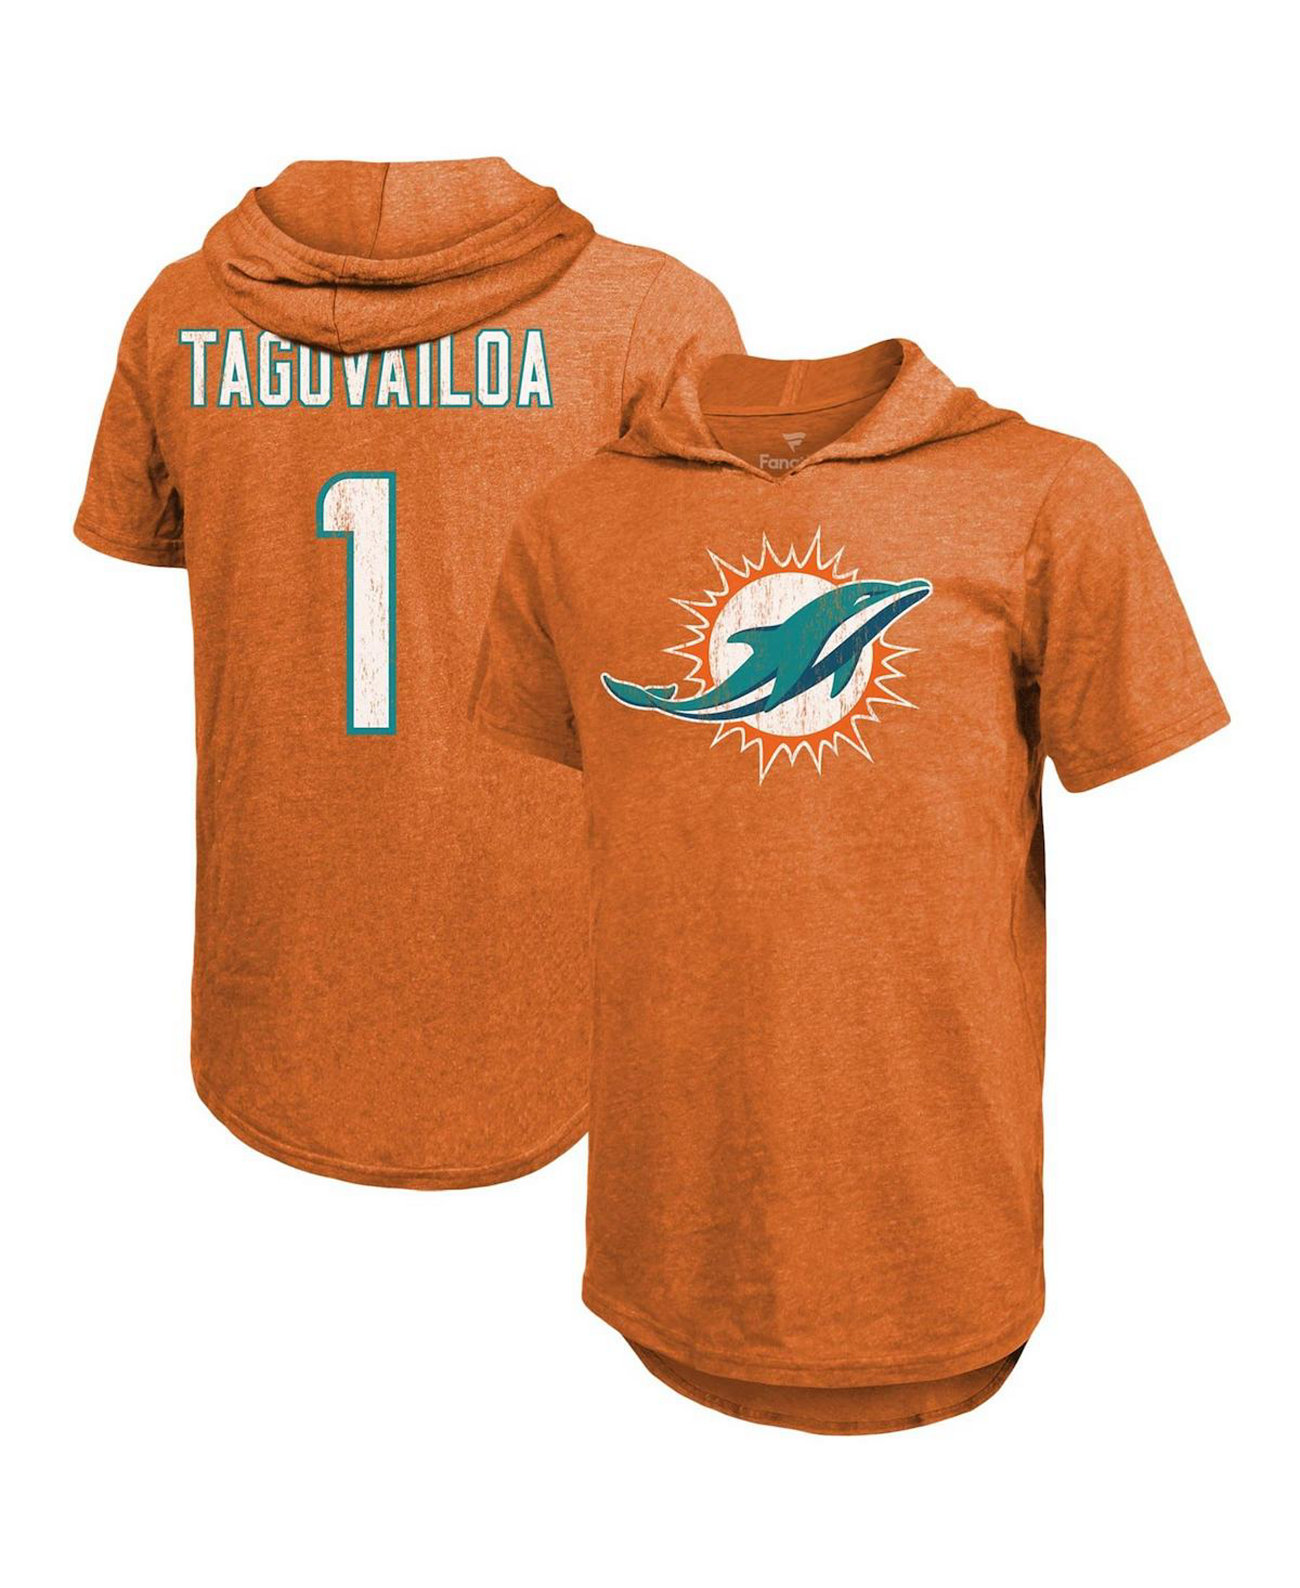 Мужская футболка с капюшоном Tua Tagovailoa Orange Miami Dolphins с именем и номером игрока Tri-Blend Majestic